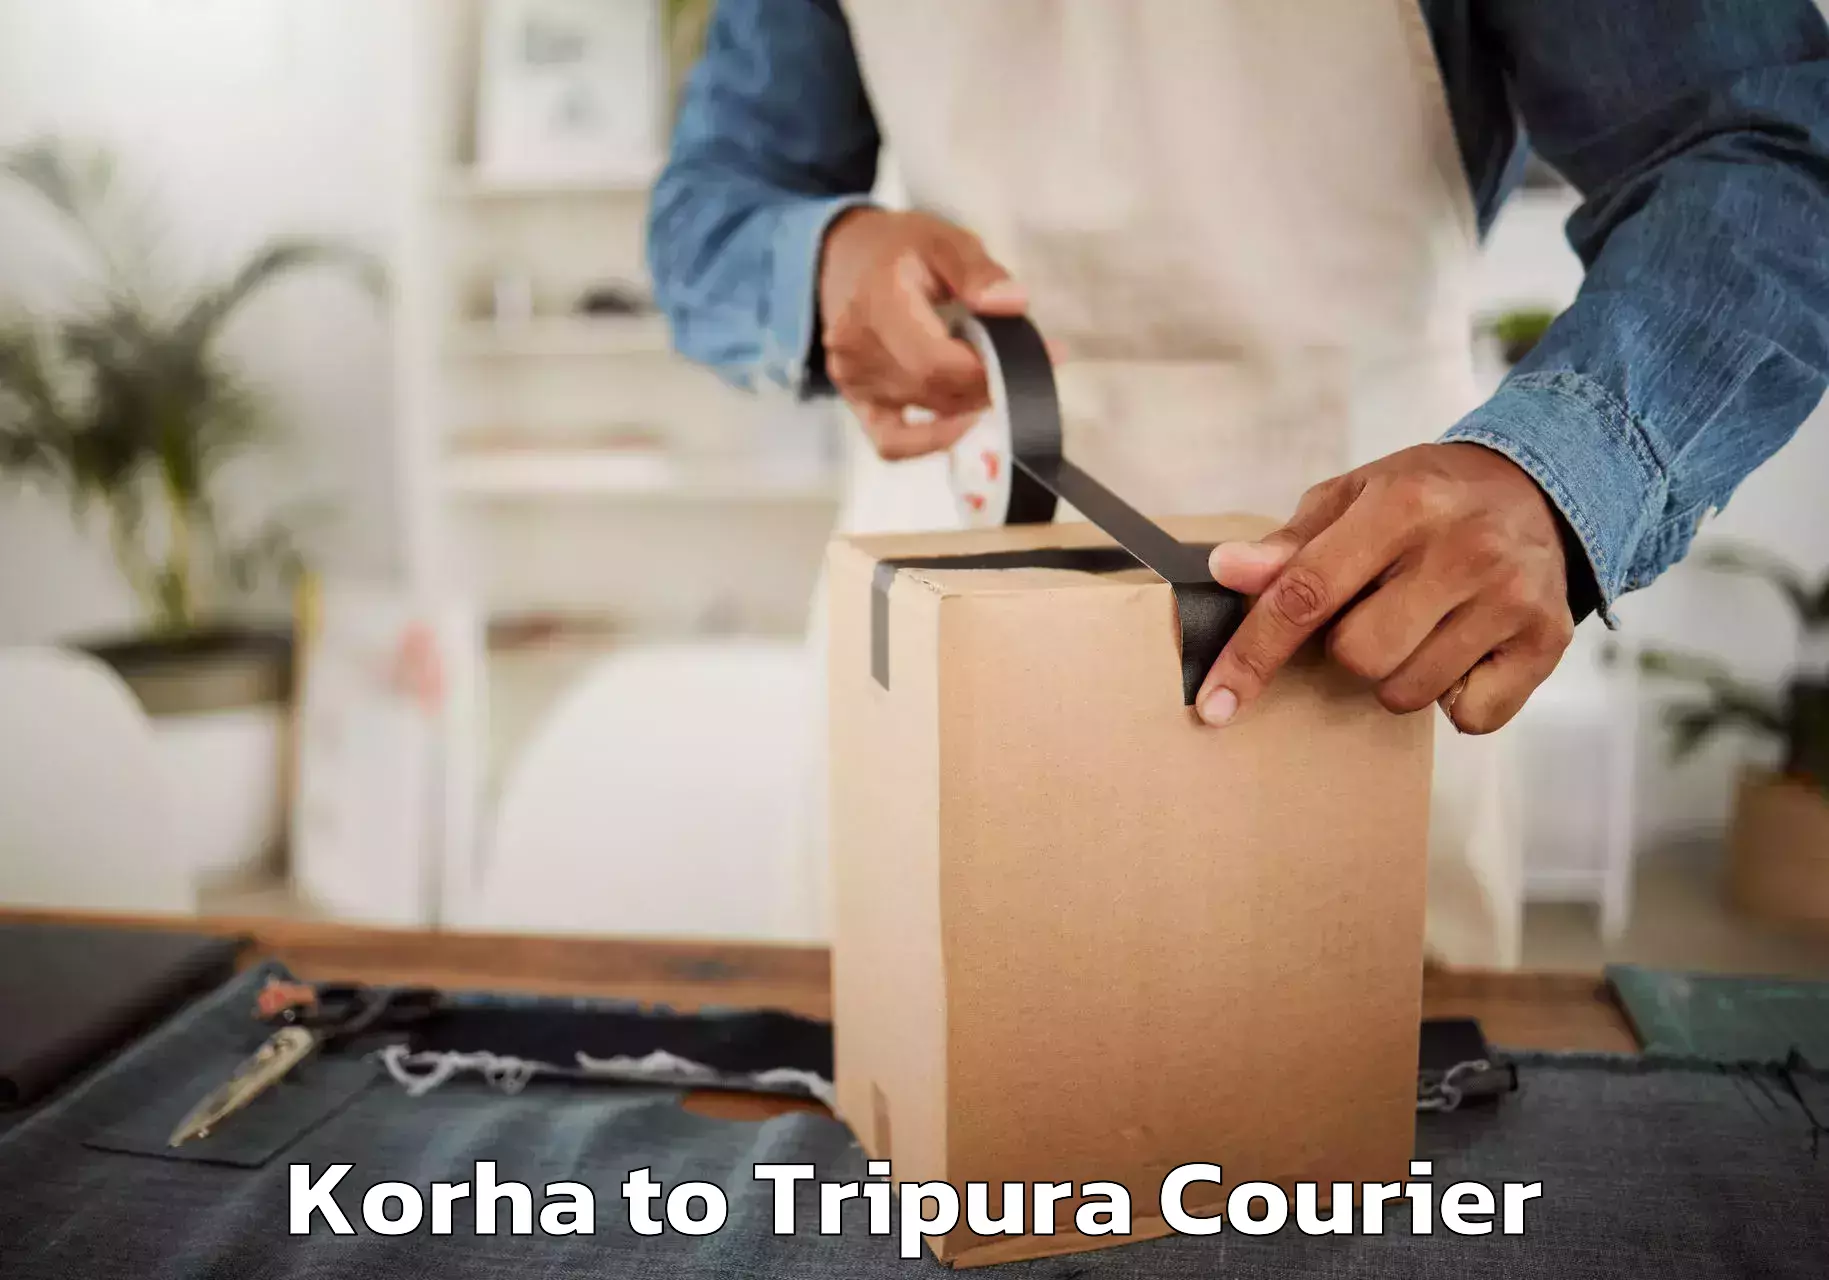 Professional moving company Korha to Tripura